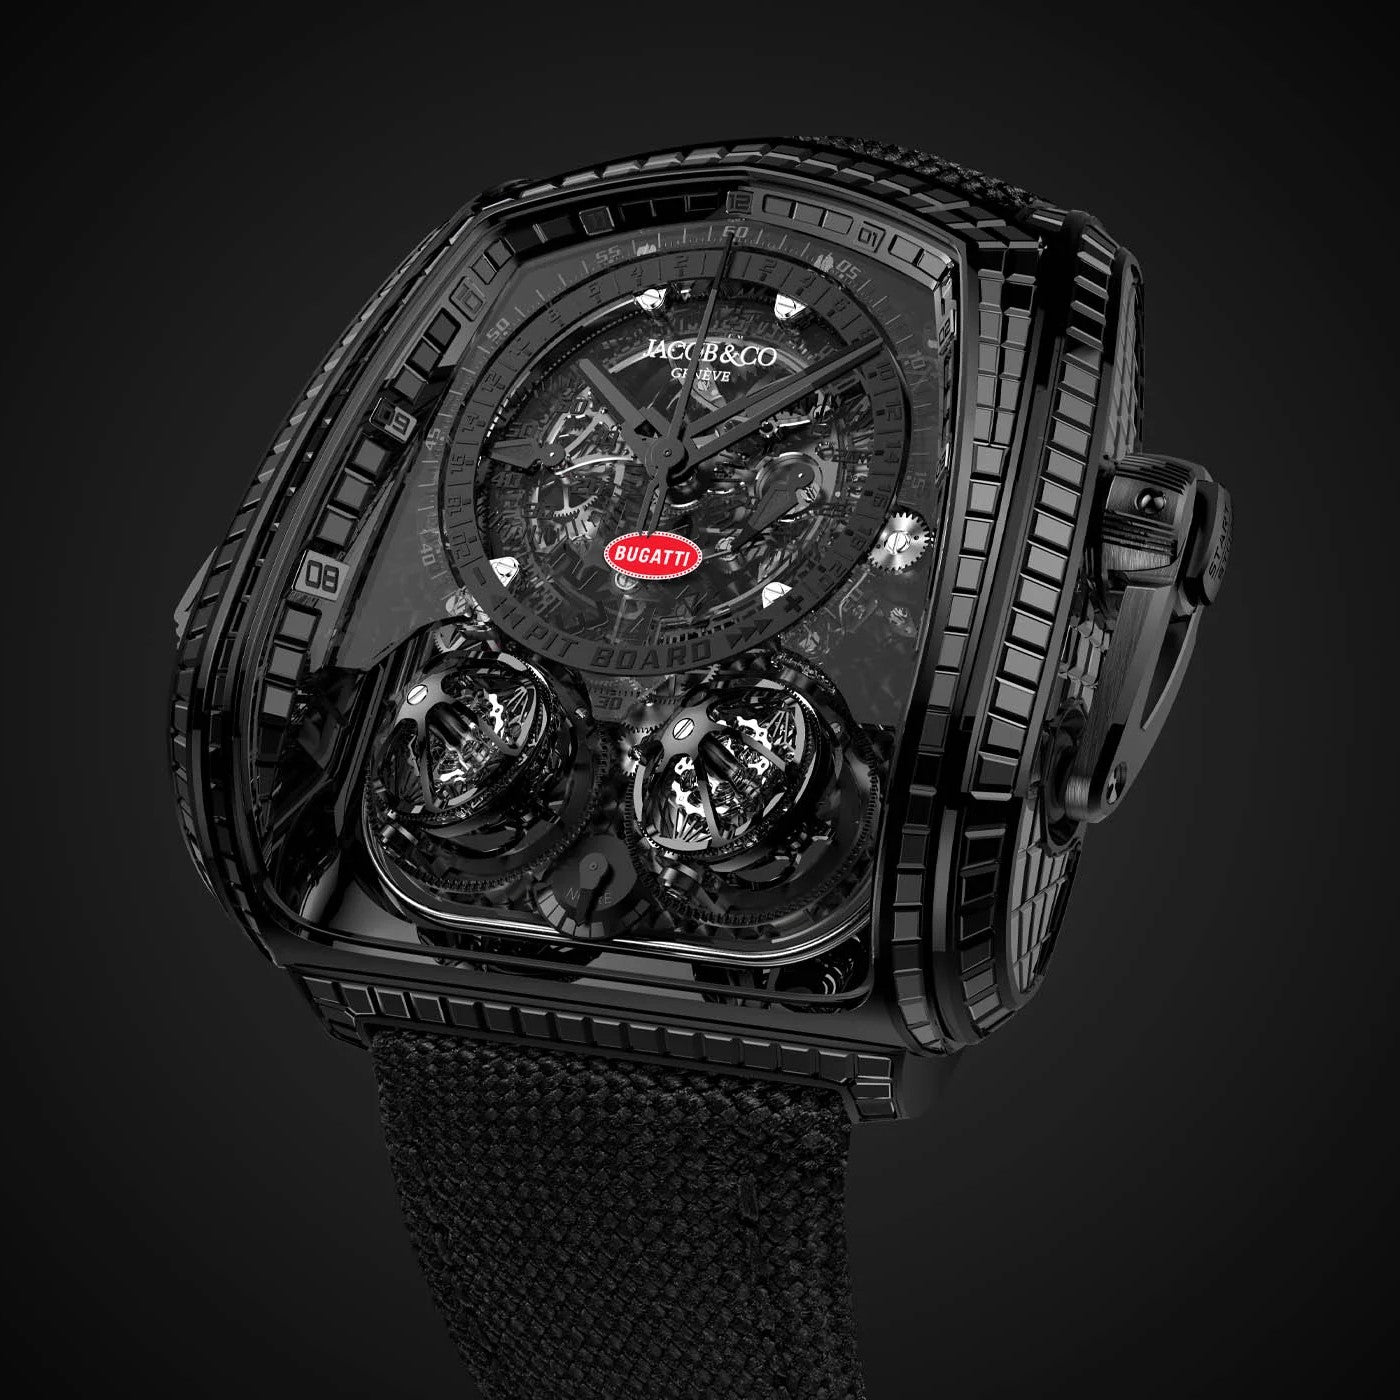 Bugatti Watch Price